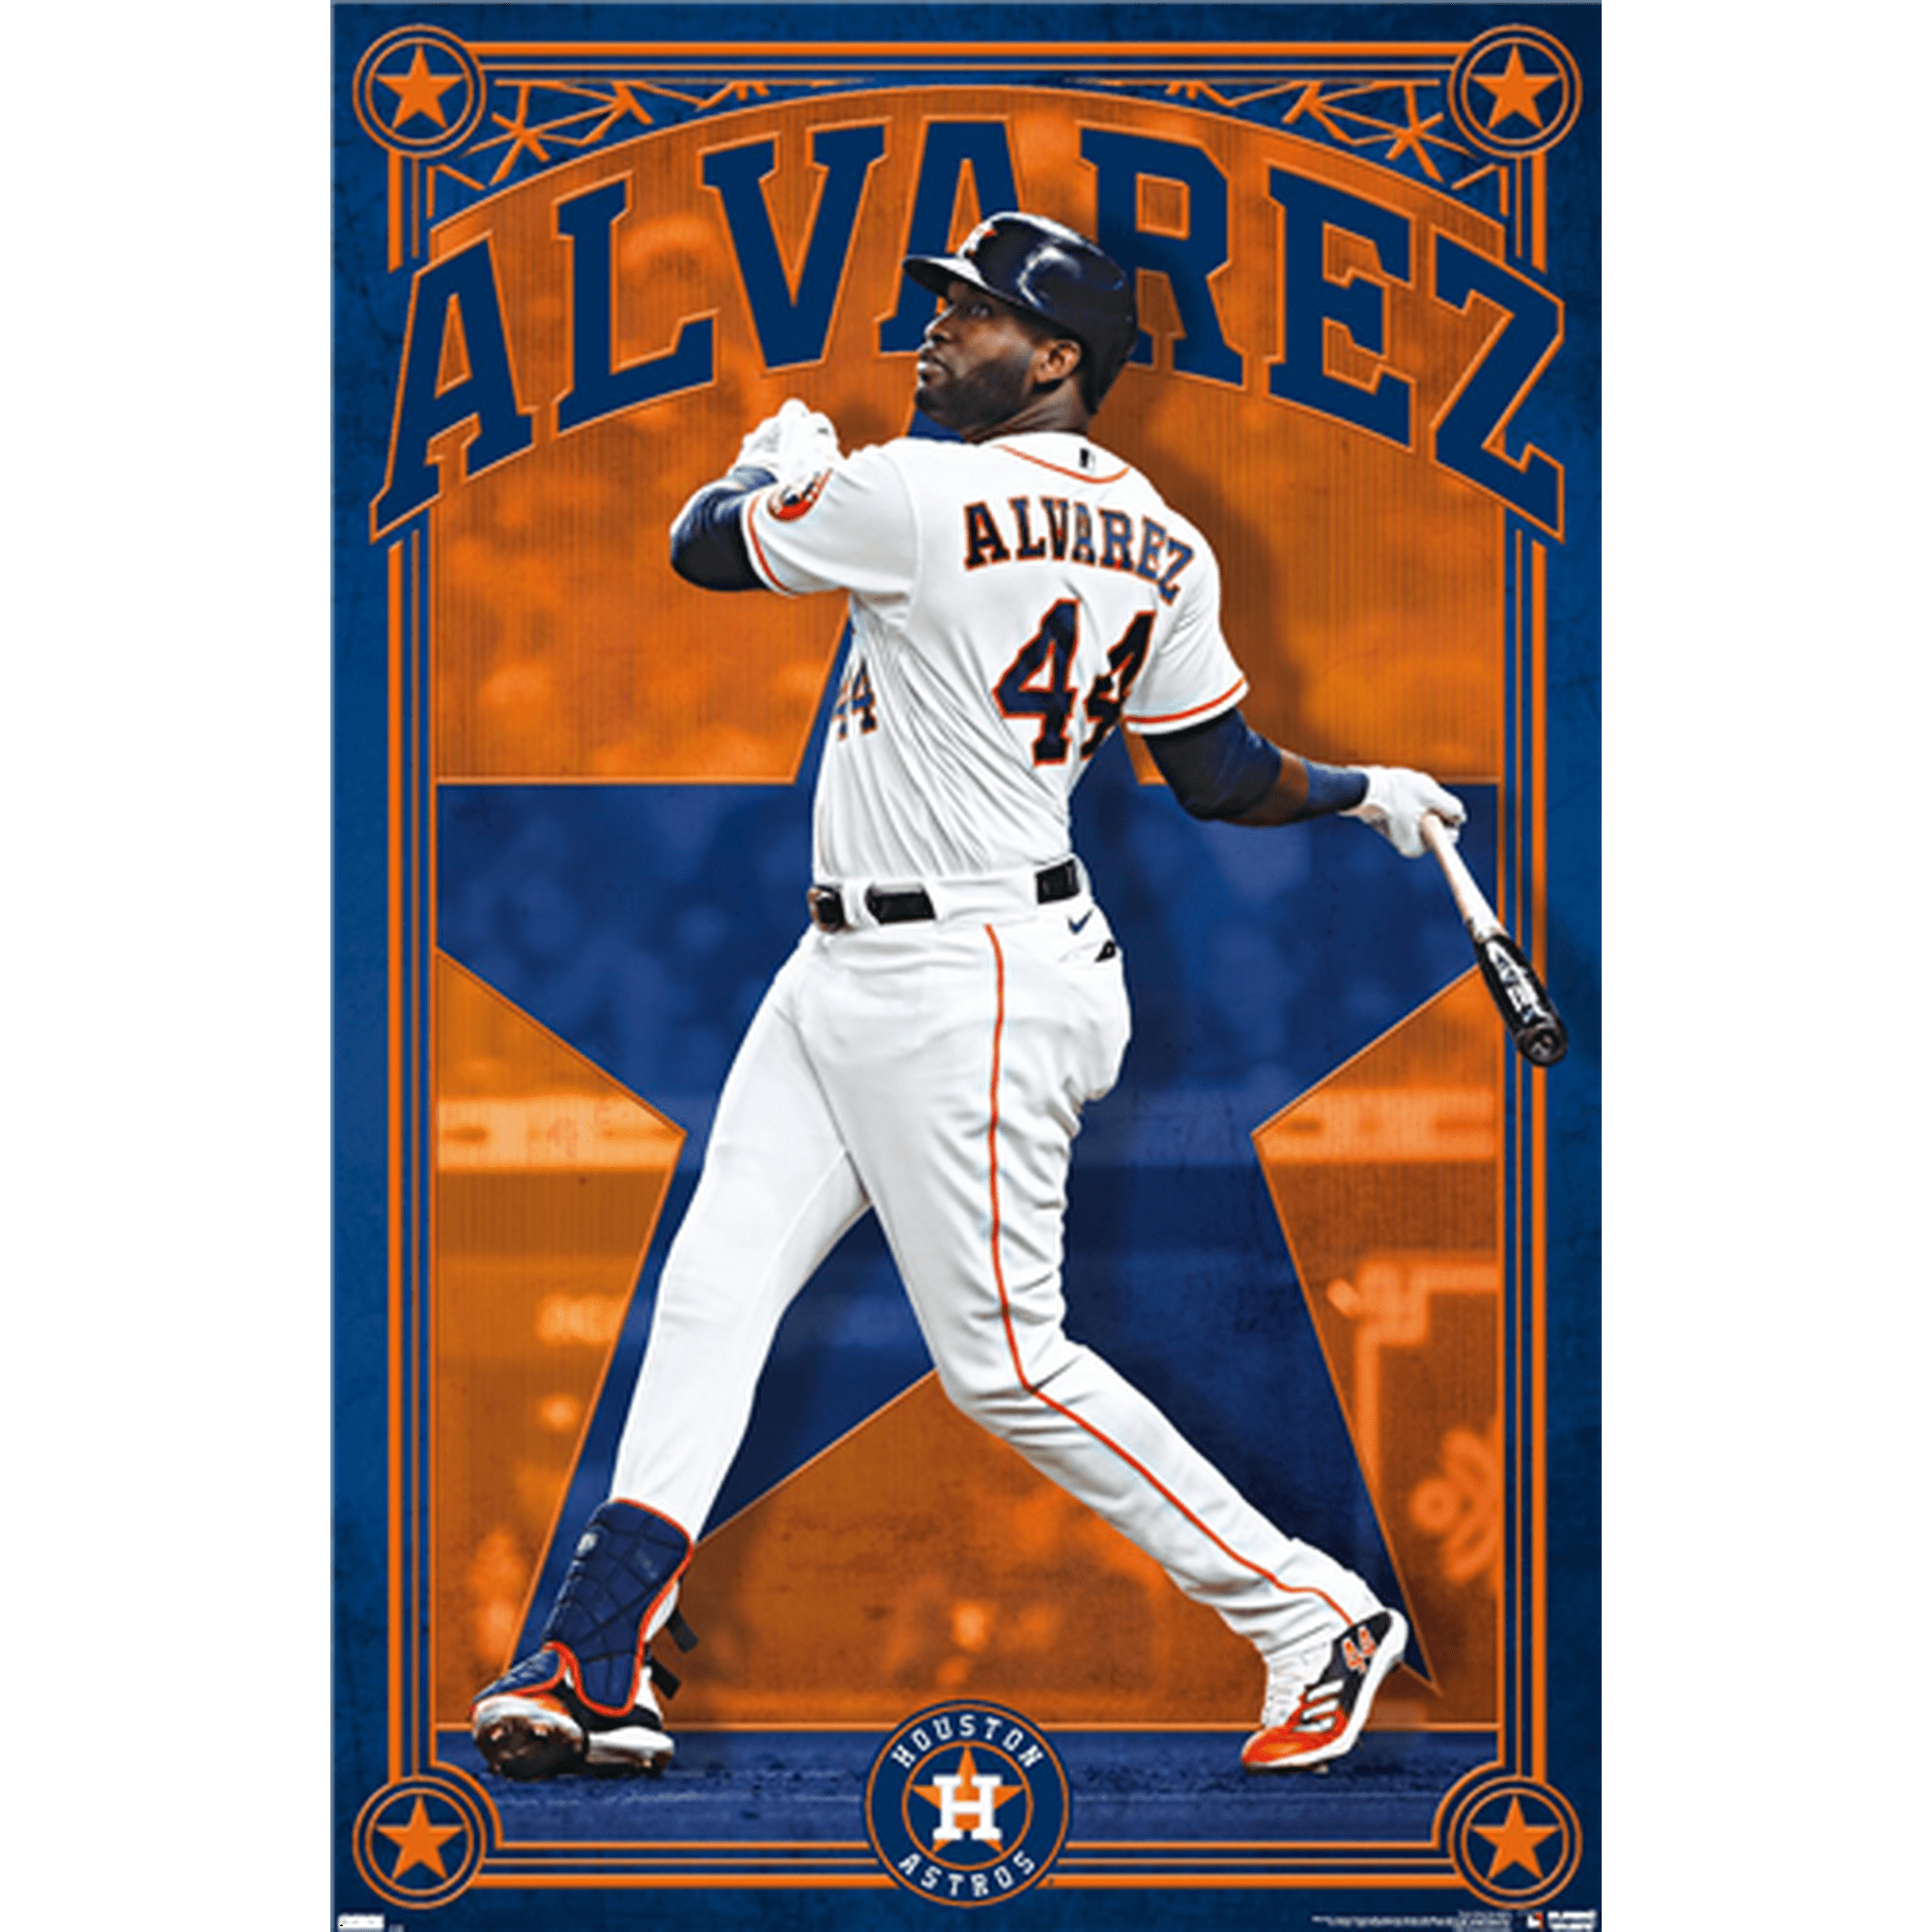 MLB Houston Astros - Yordan Alvarez 22 Wall Poster, 14.725 x 22.375 